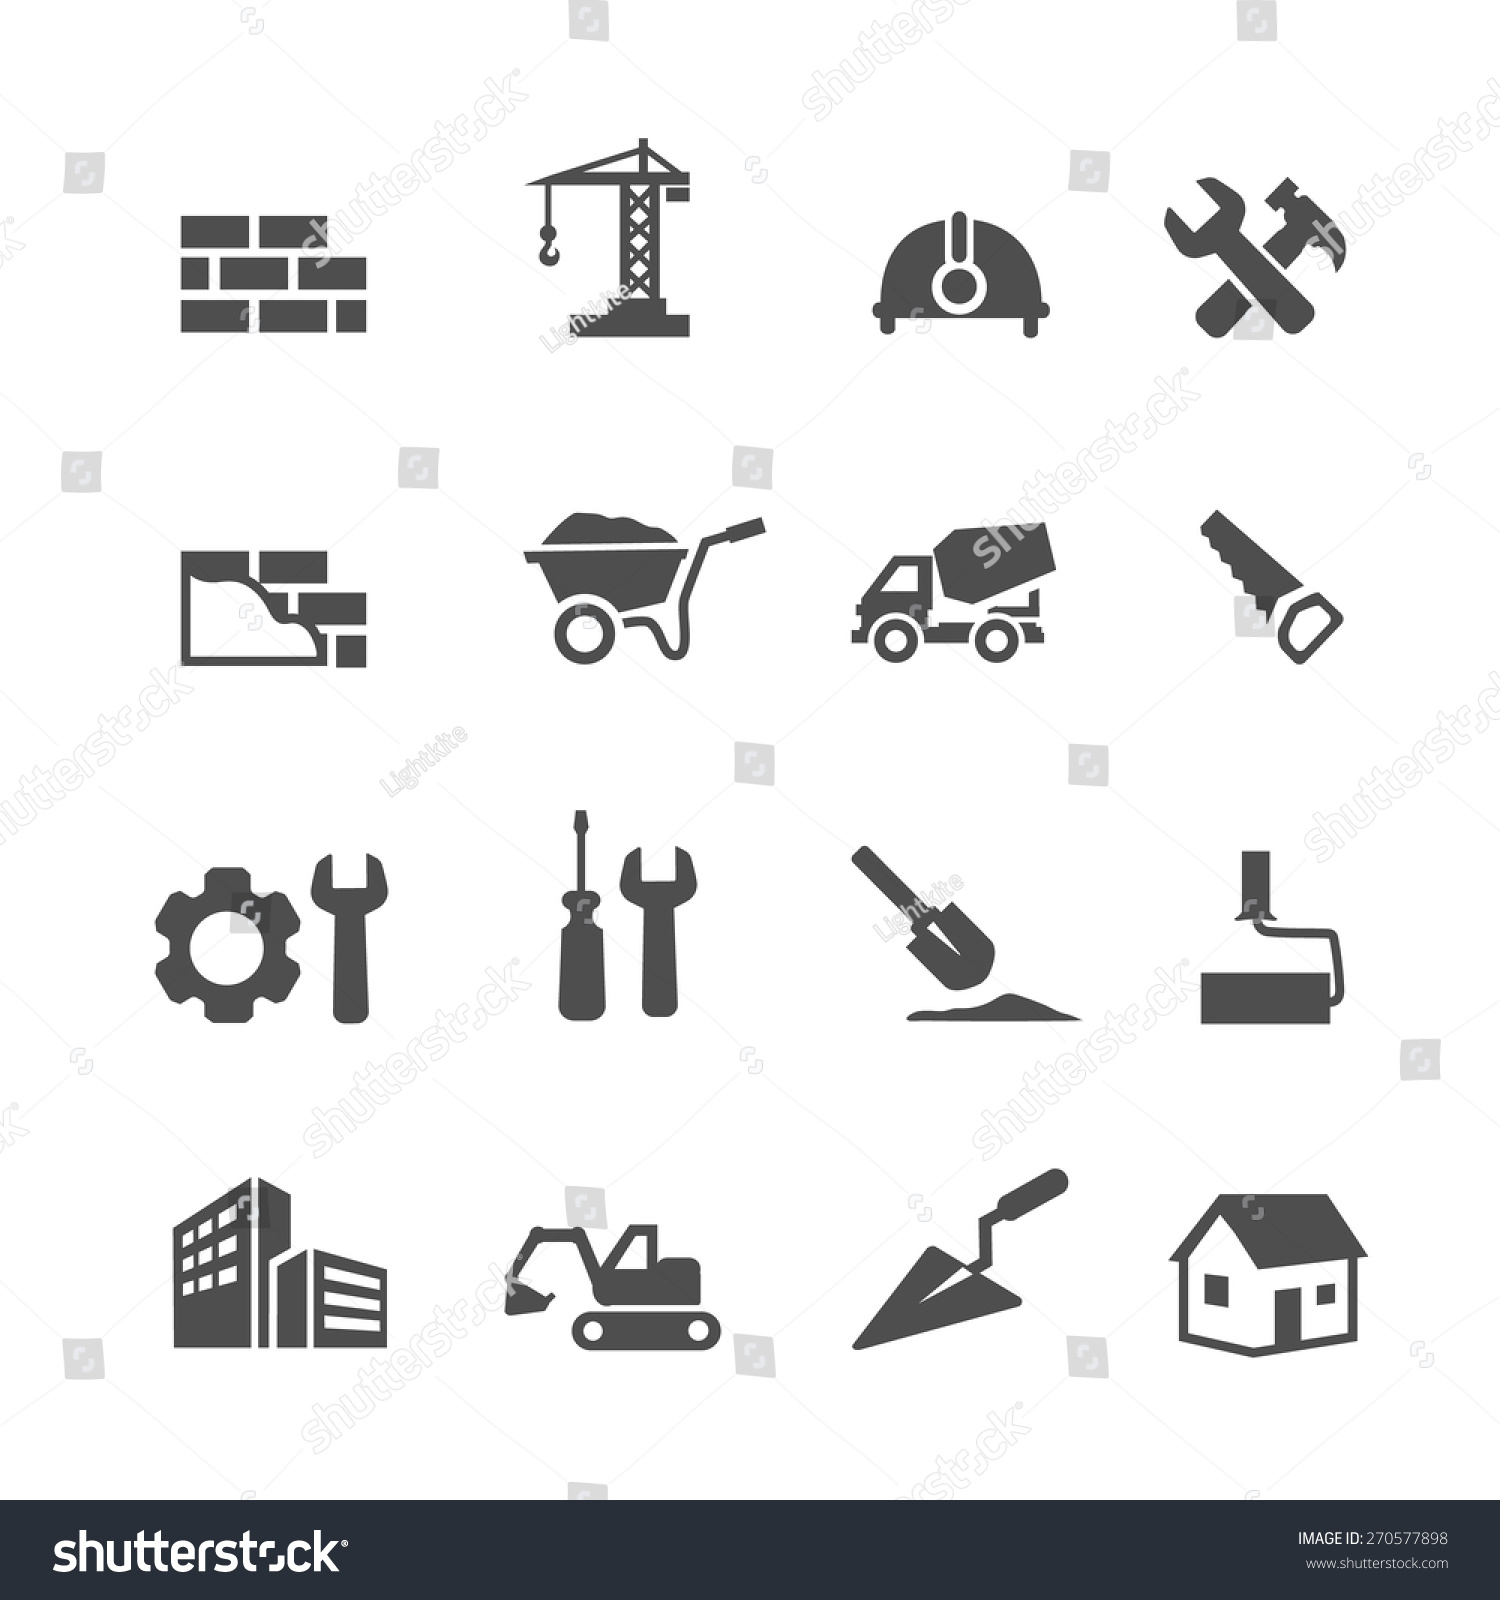 SVG of Construction Icons Set on White Background.  Vector illustration svg